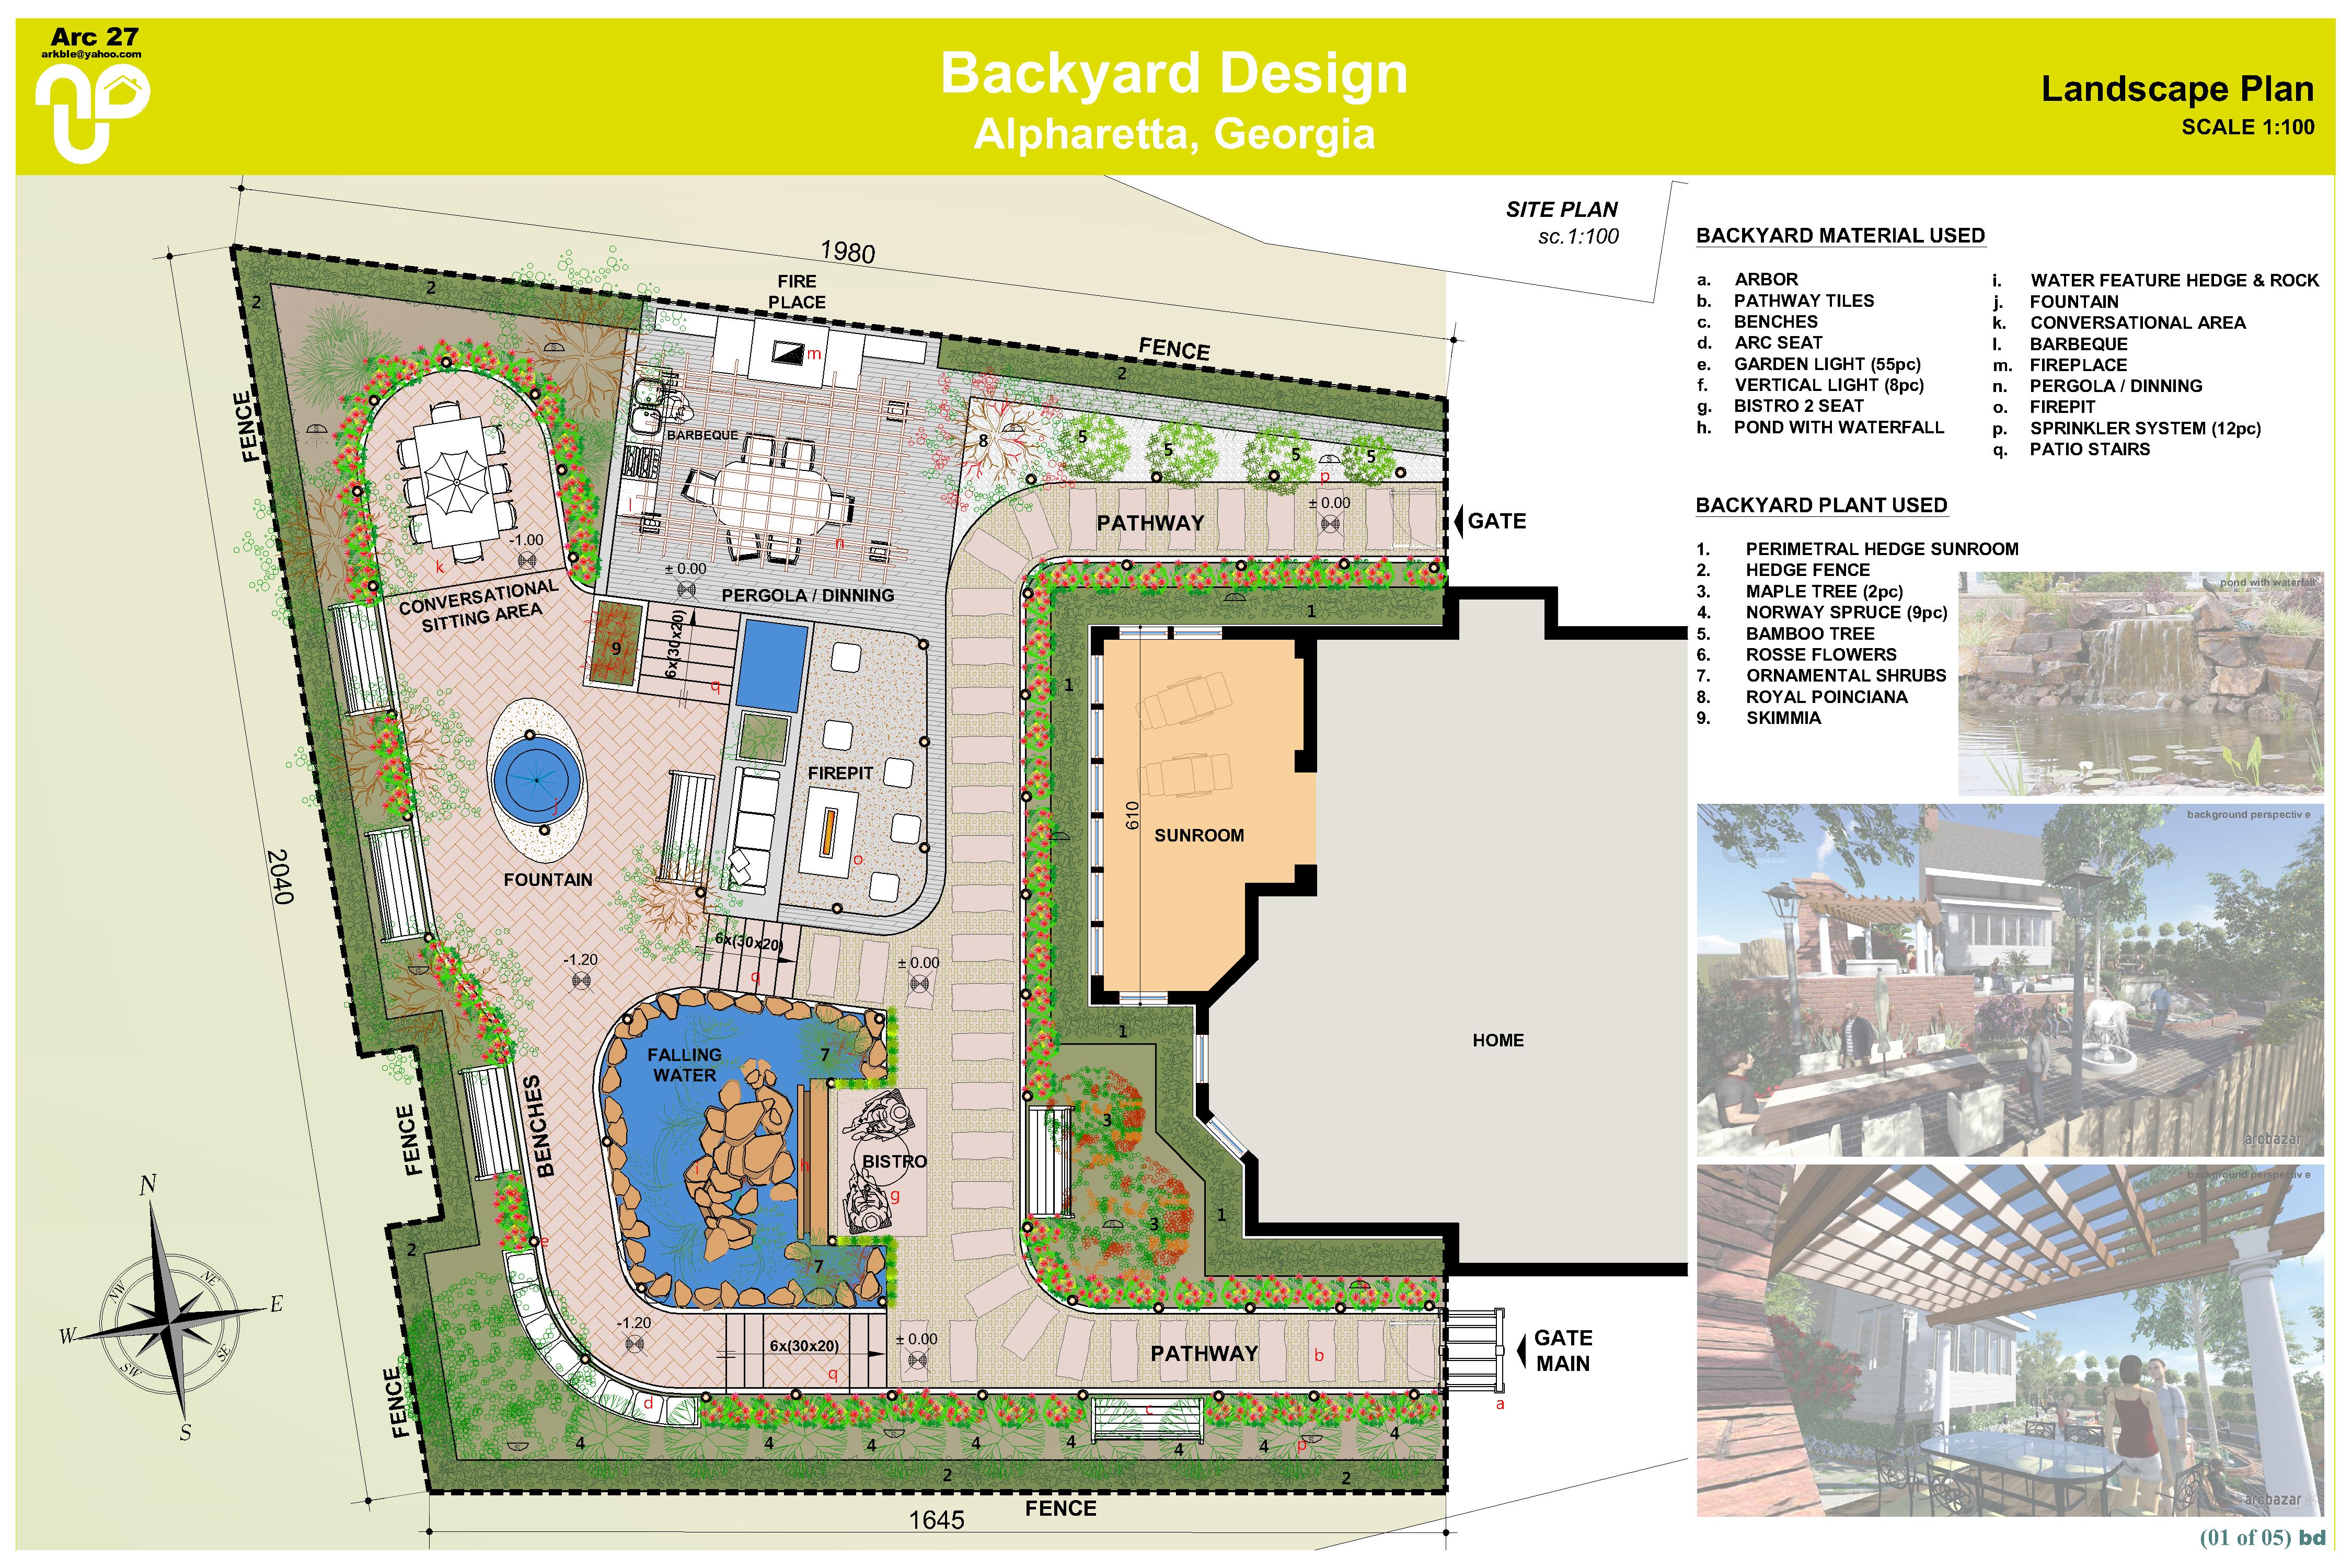 backyard design plans photo - 1